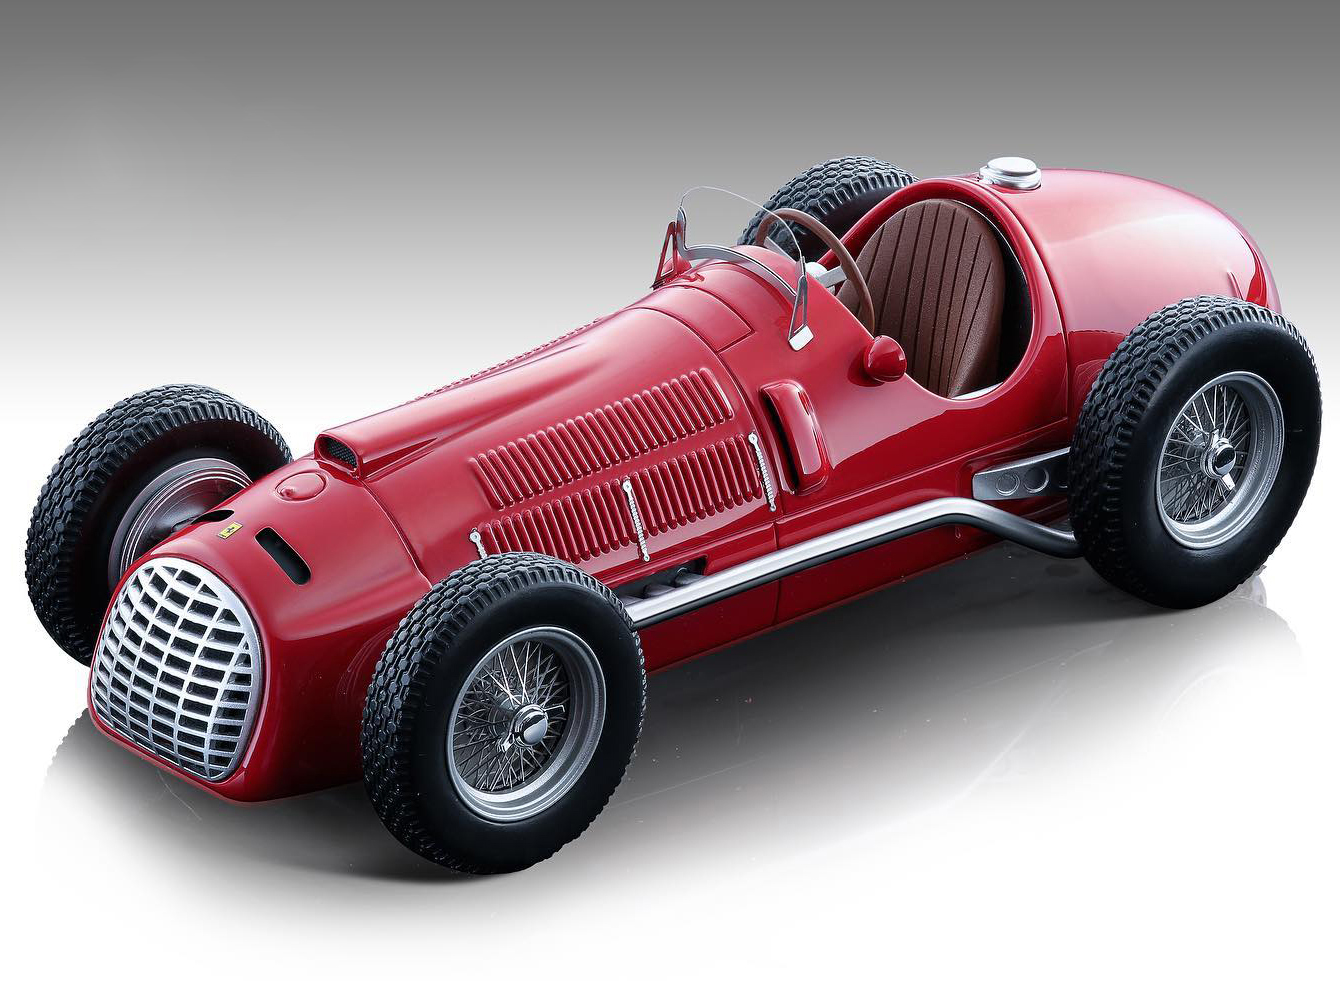 1950 Ferrari F1 275 Press Version Red "Mythos Series" Limited Edition to 80 pieces Worldwide 1/18 Model Car by Tecnomodel